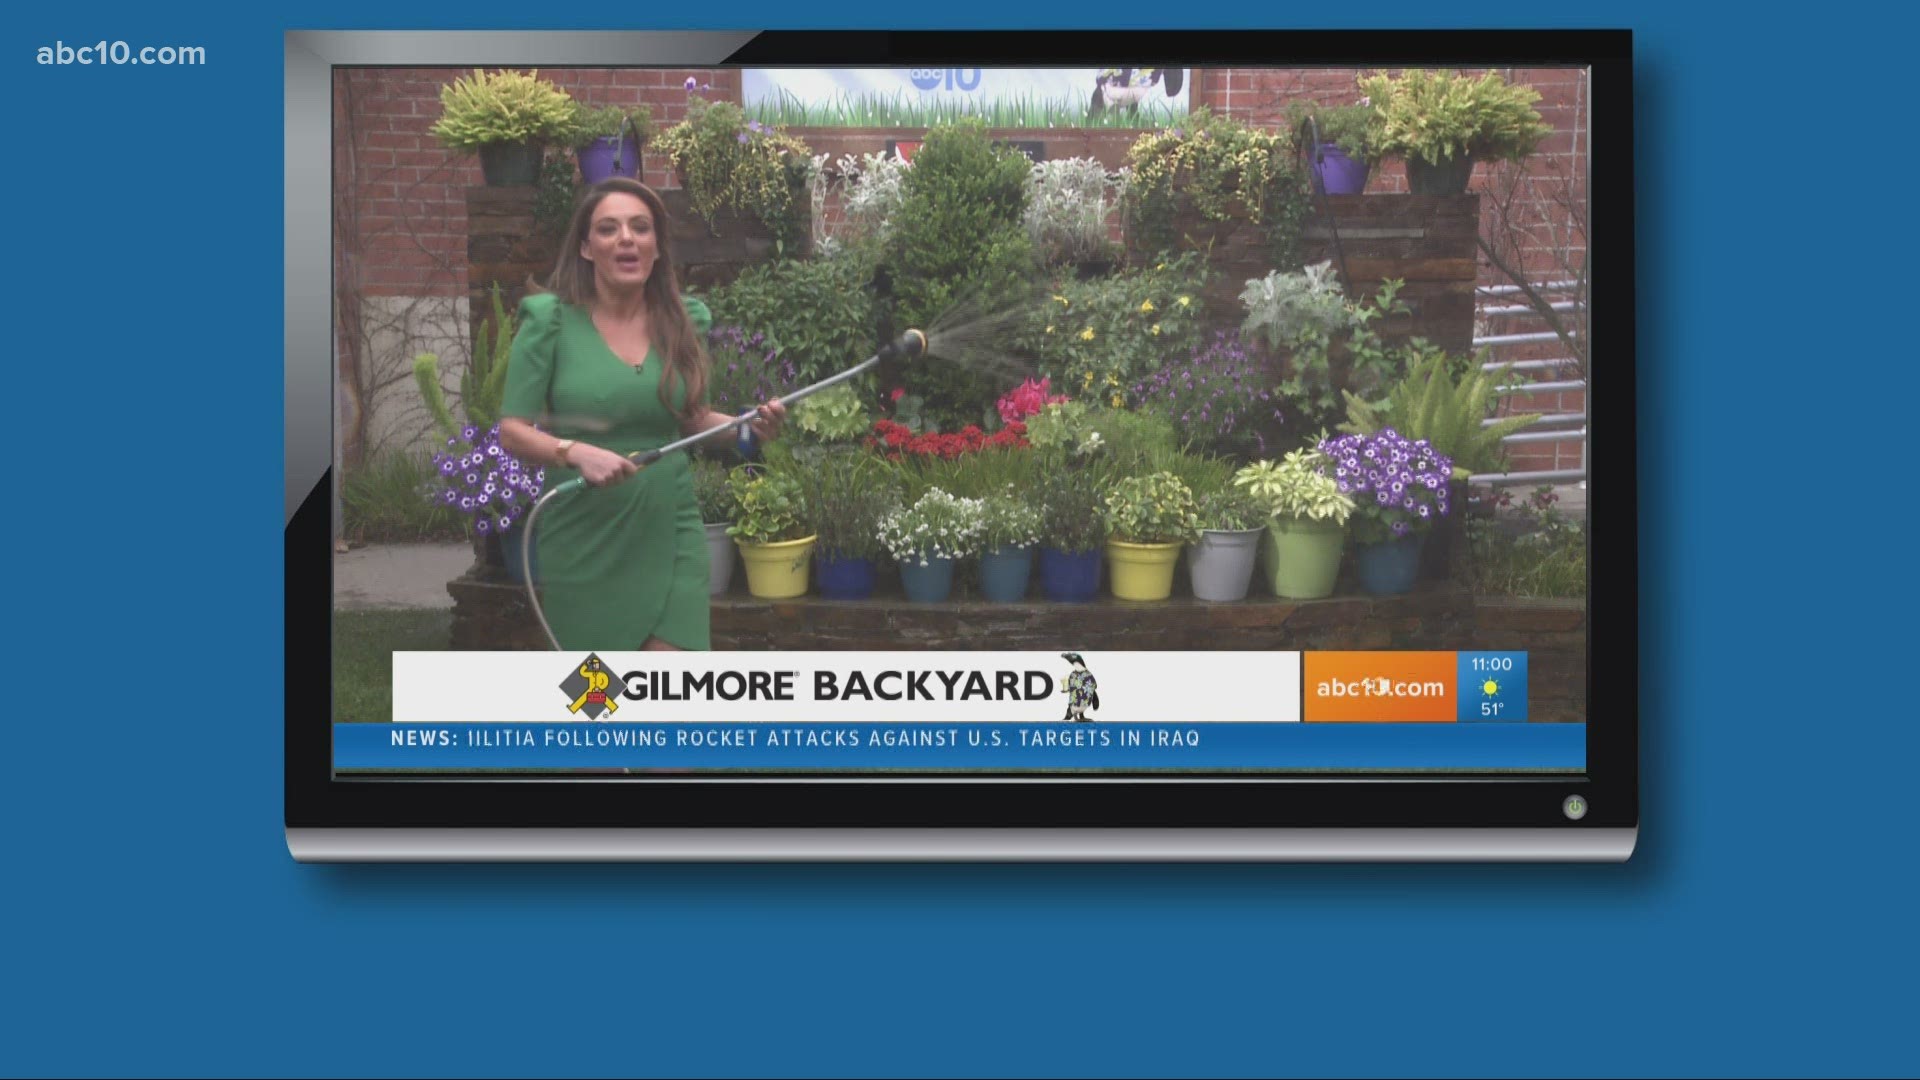 Brittany Begley got some tips on watering the Gilmore Backyard from ABC10's garden guru Cheyenne Azevedo.